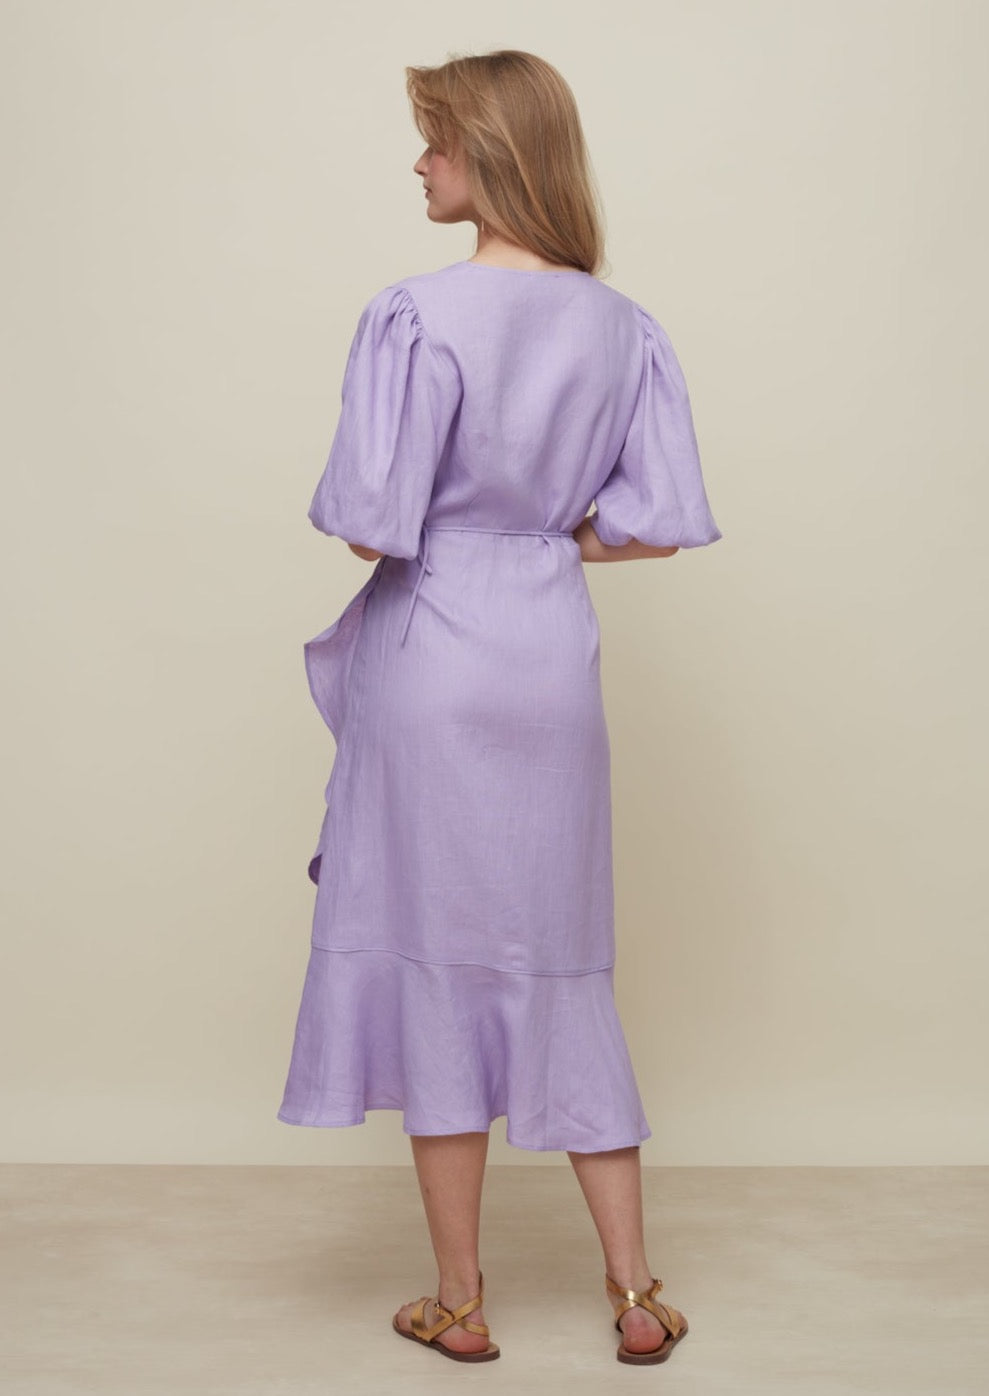 Galeria-Crossed Lilac Dress-Justbrazil